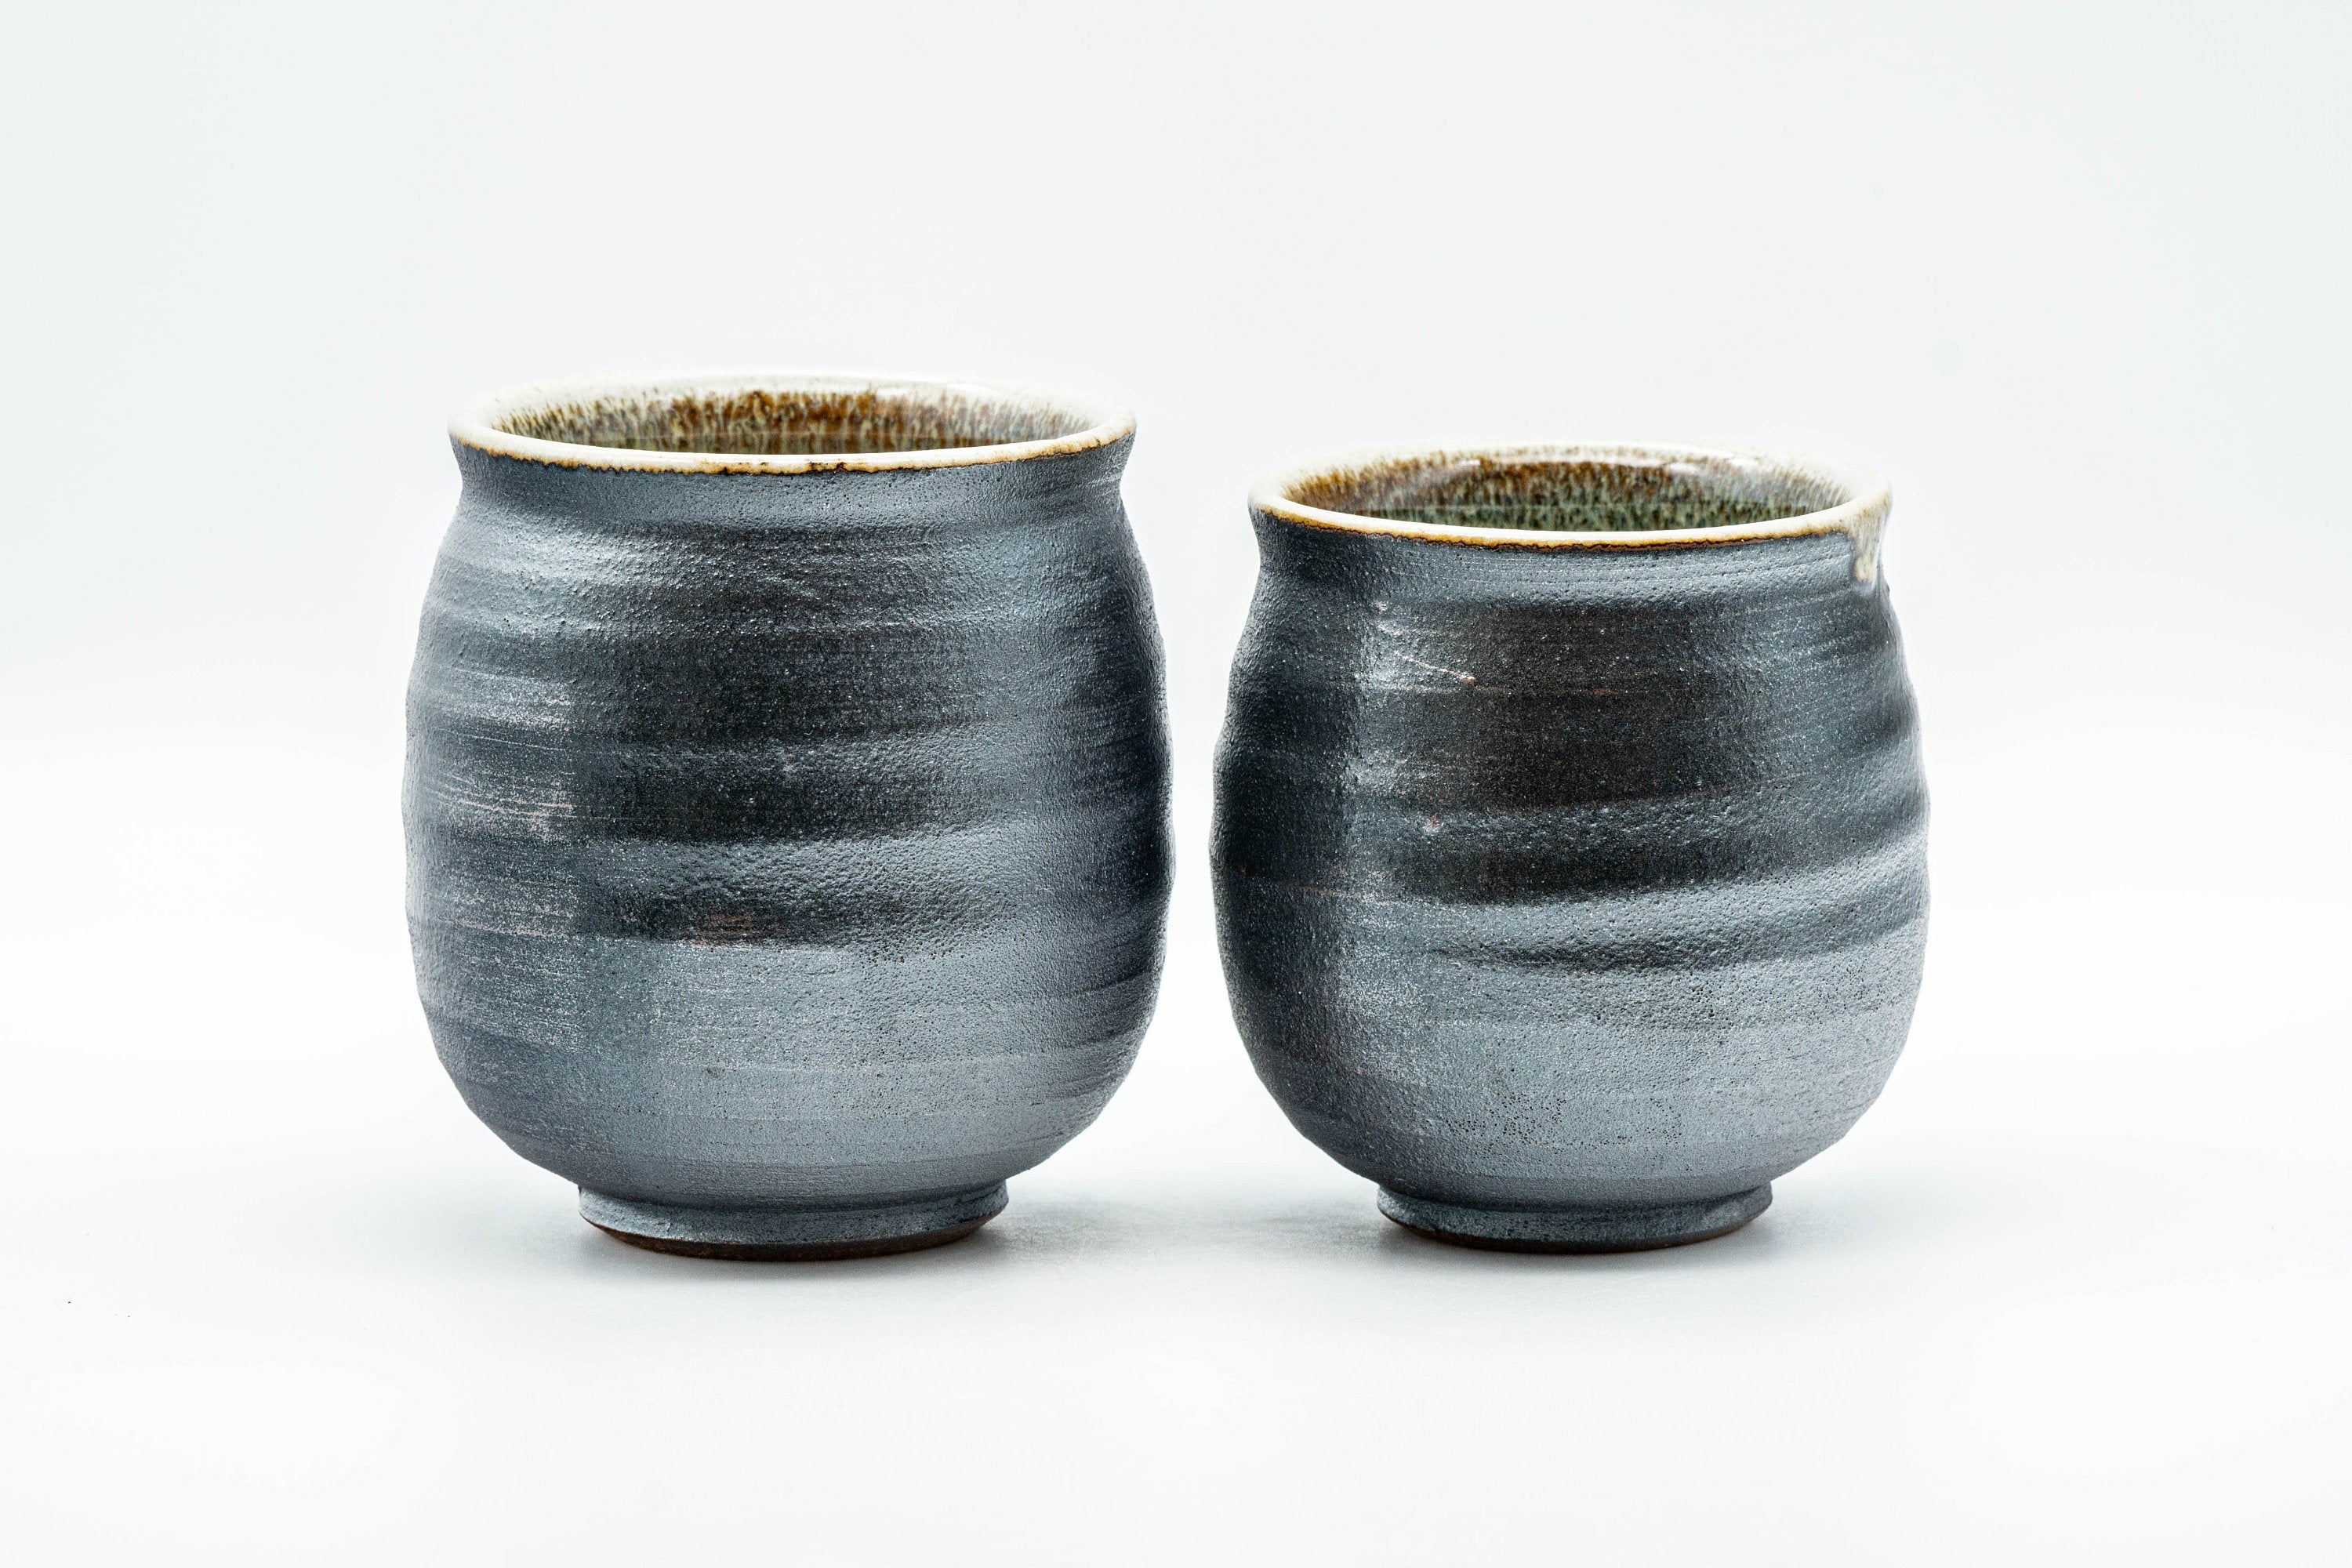 Japanese Teacups - Pair of Meoto Metallic Grey and Mottled Green Yunomi